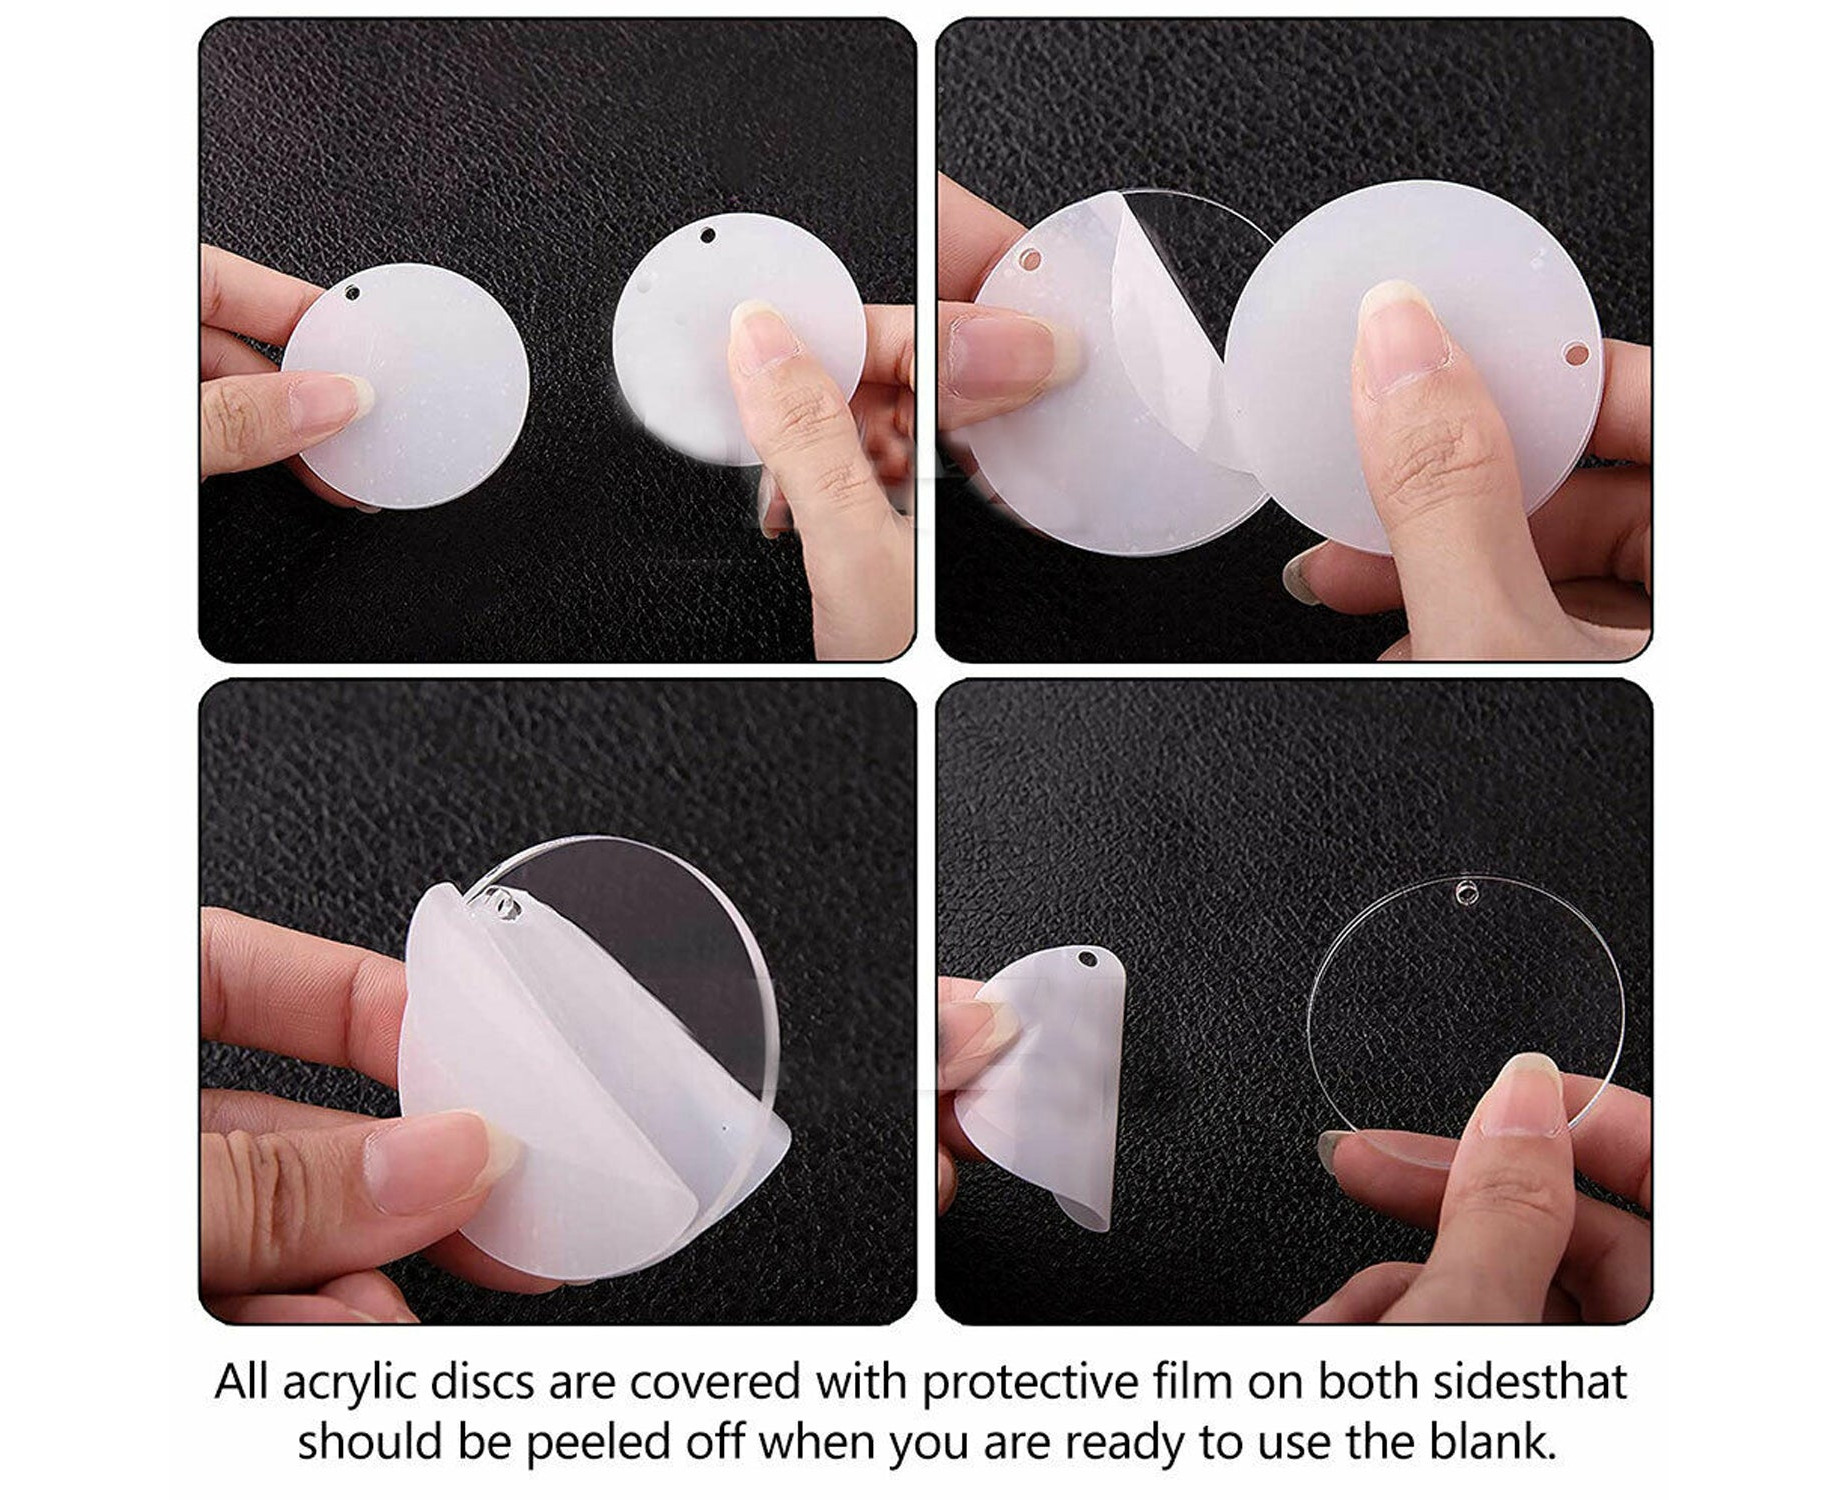 How to Use Acrylic Discs 